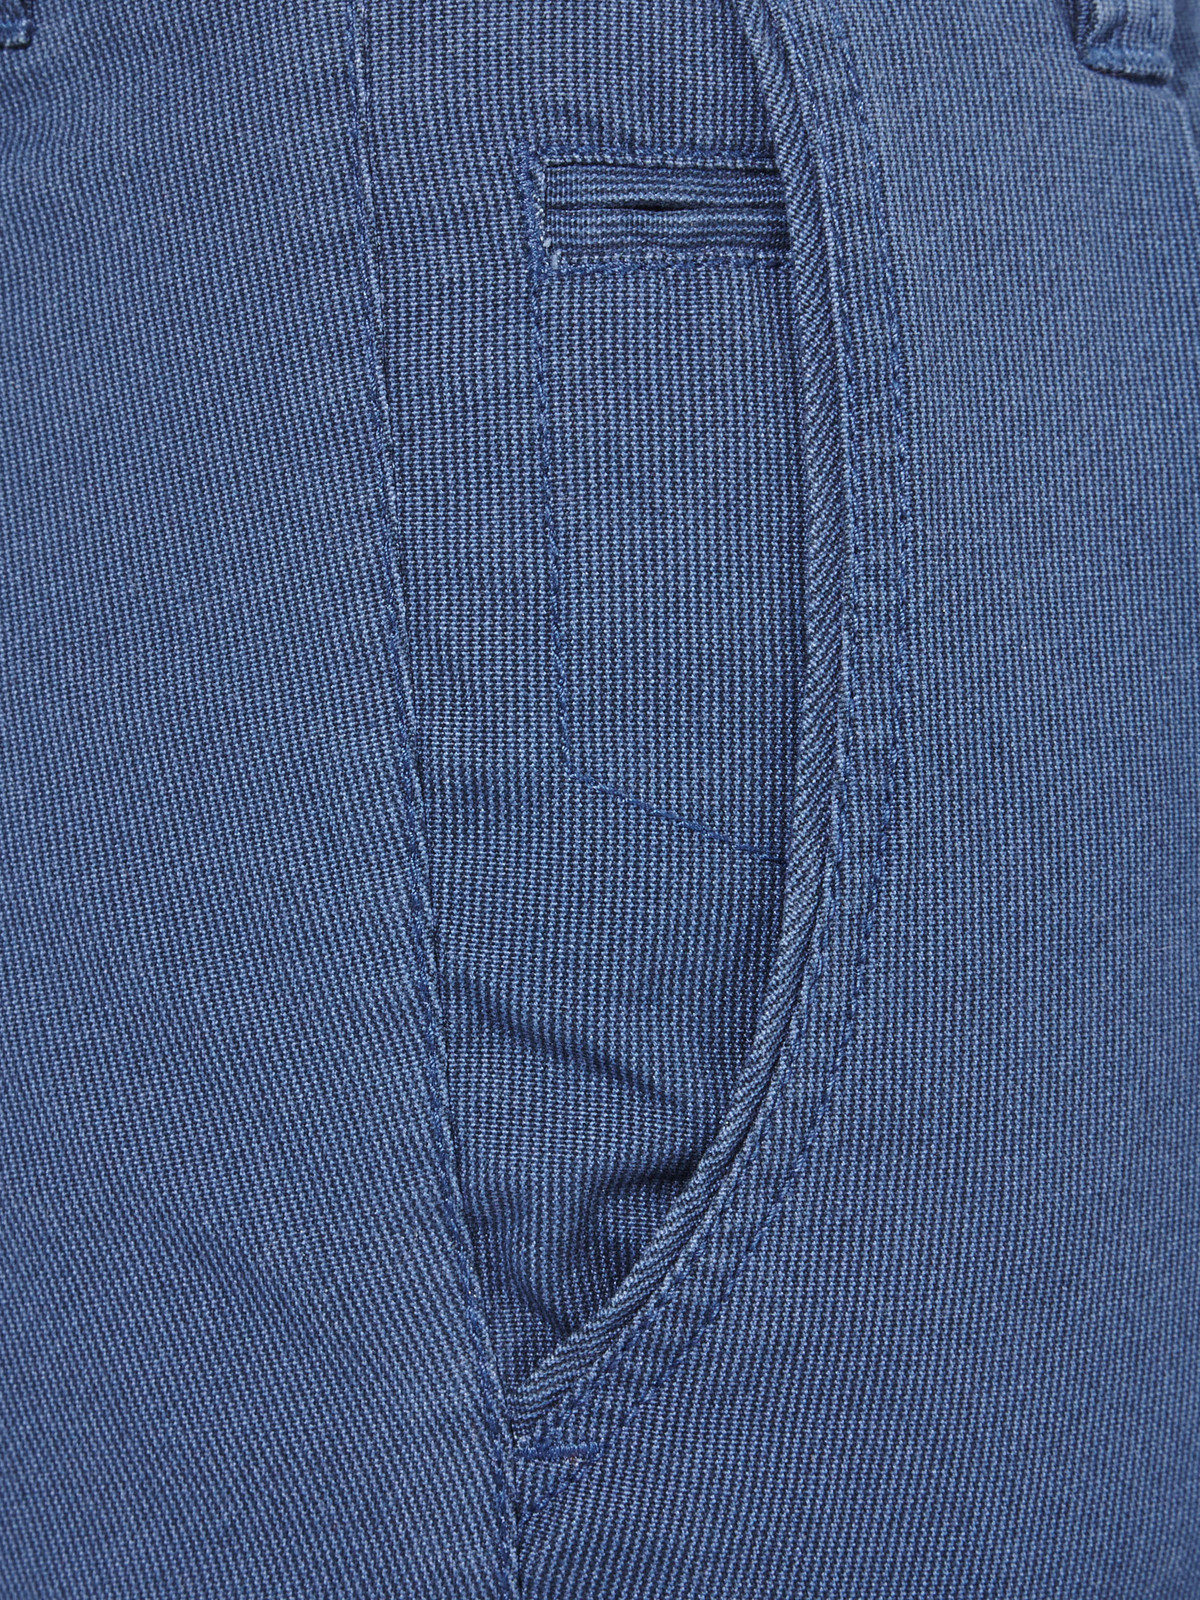 Reserved kék slim fit nadrág 2014.3.31 fotója